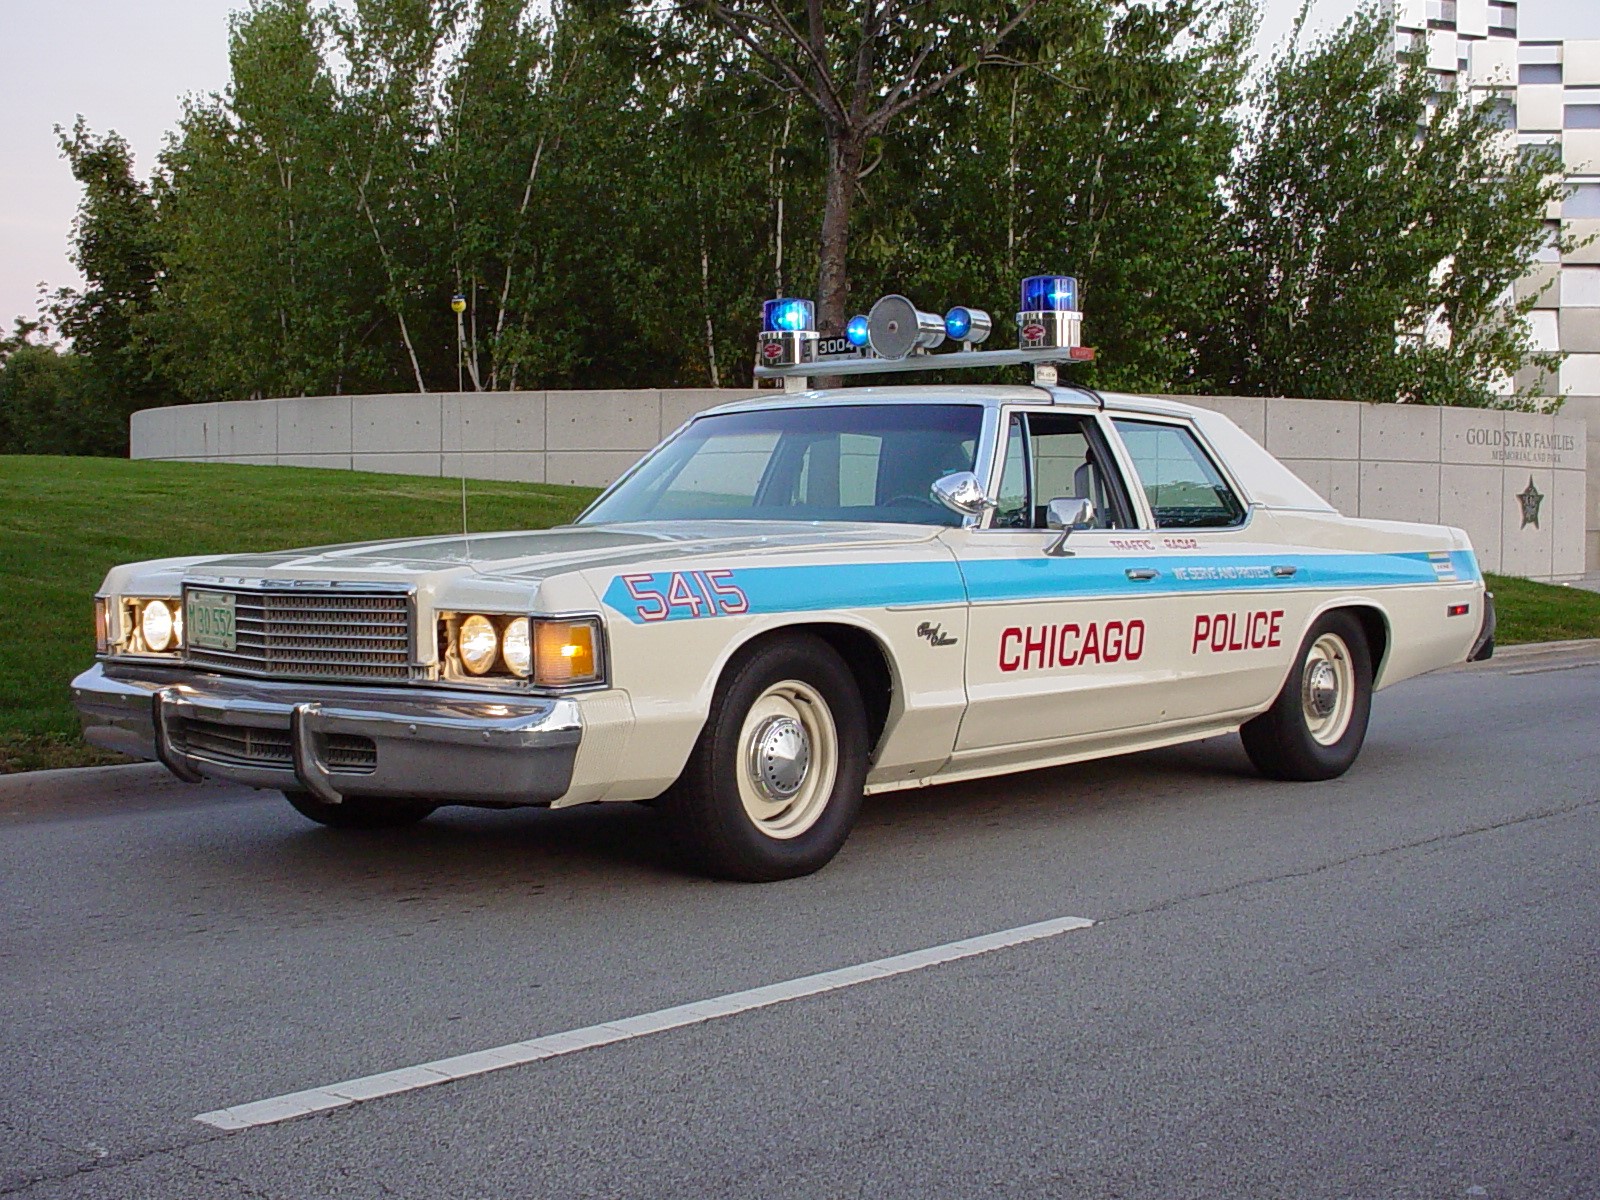 Police car 5415